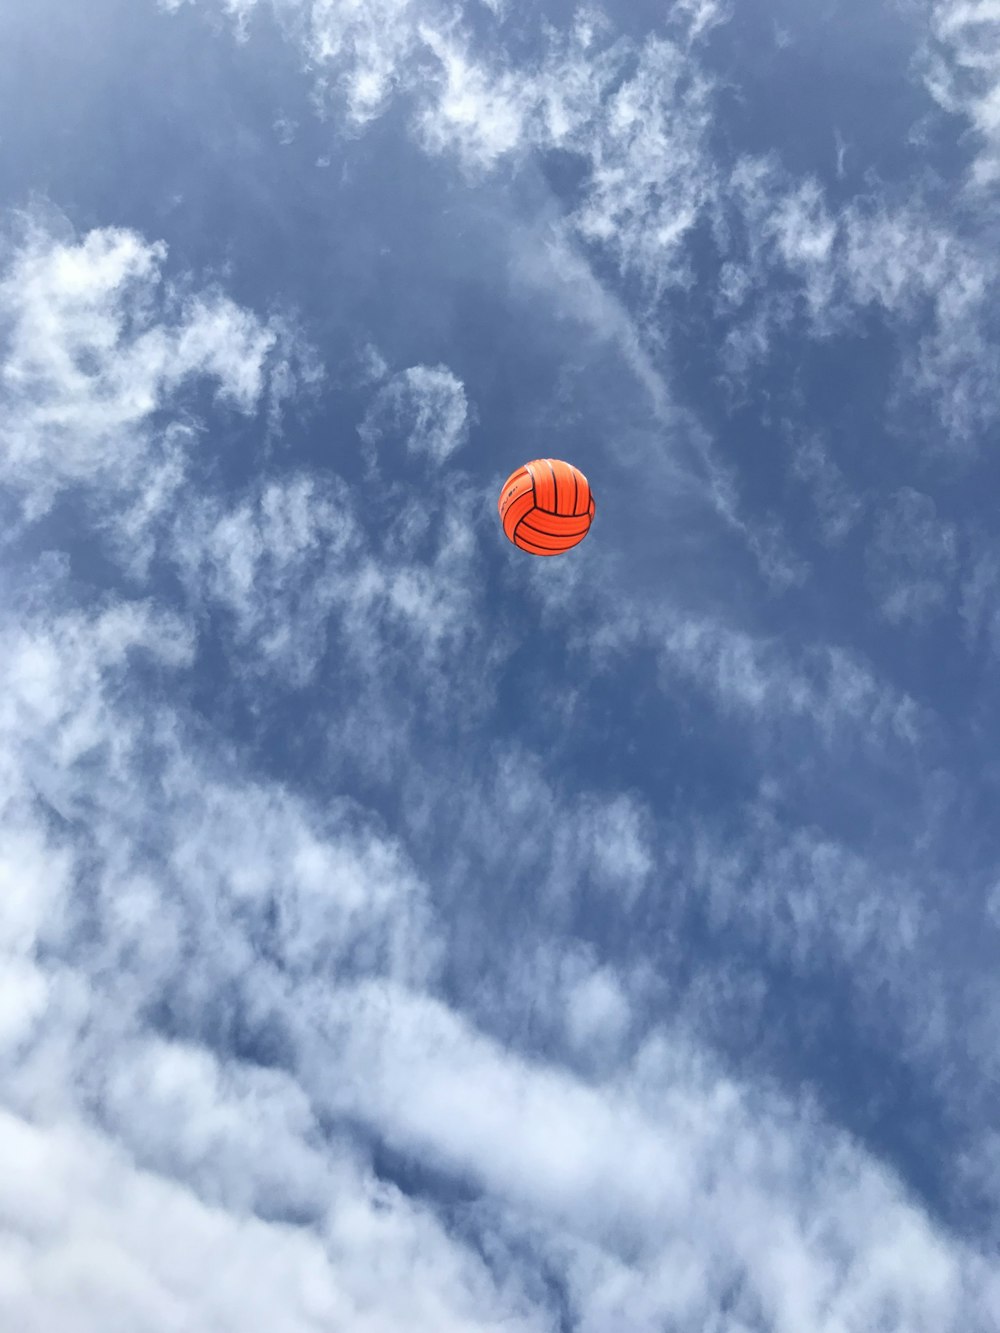 an orange kite flying through a cloudy blue sky